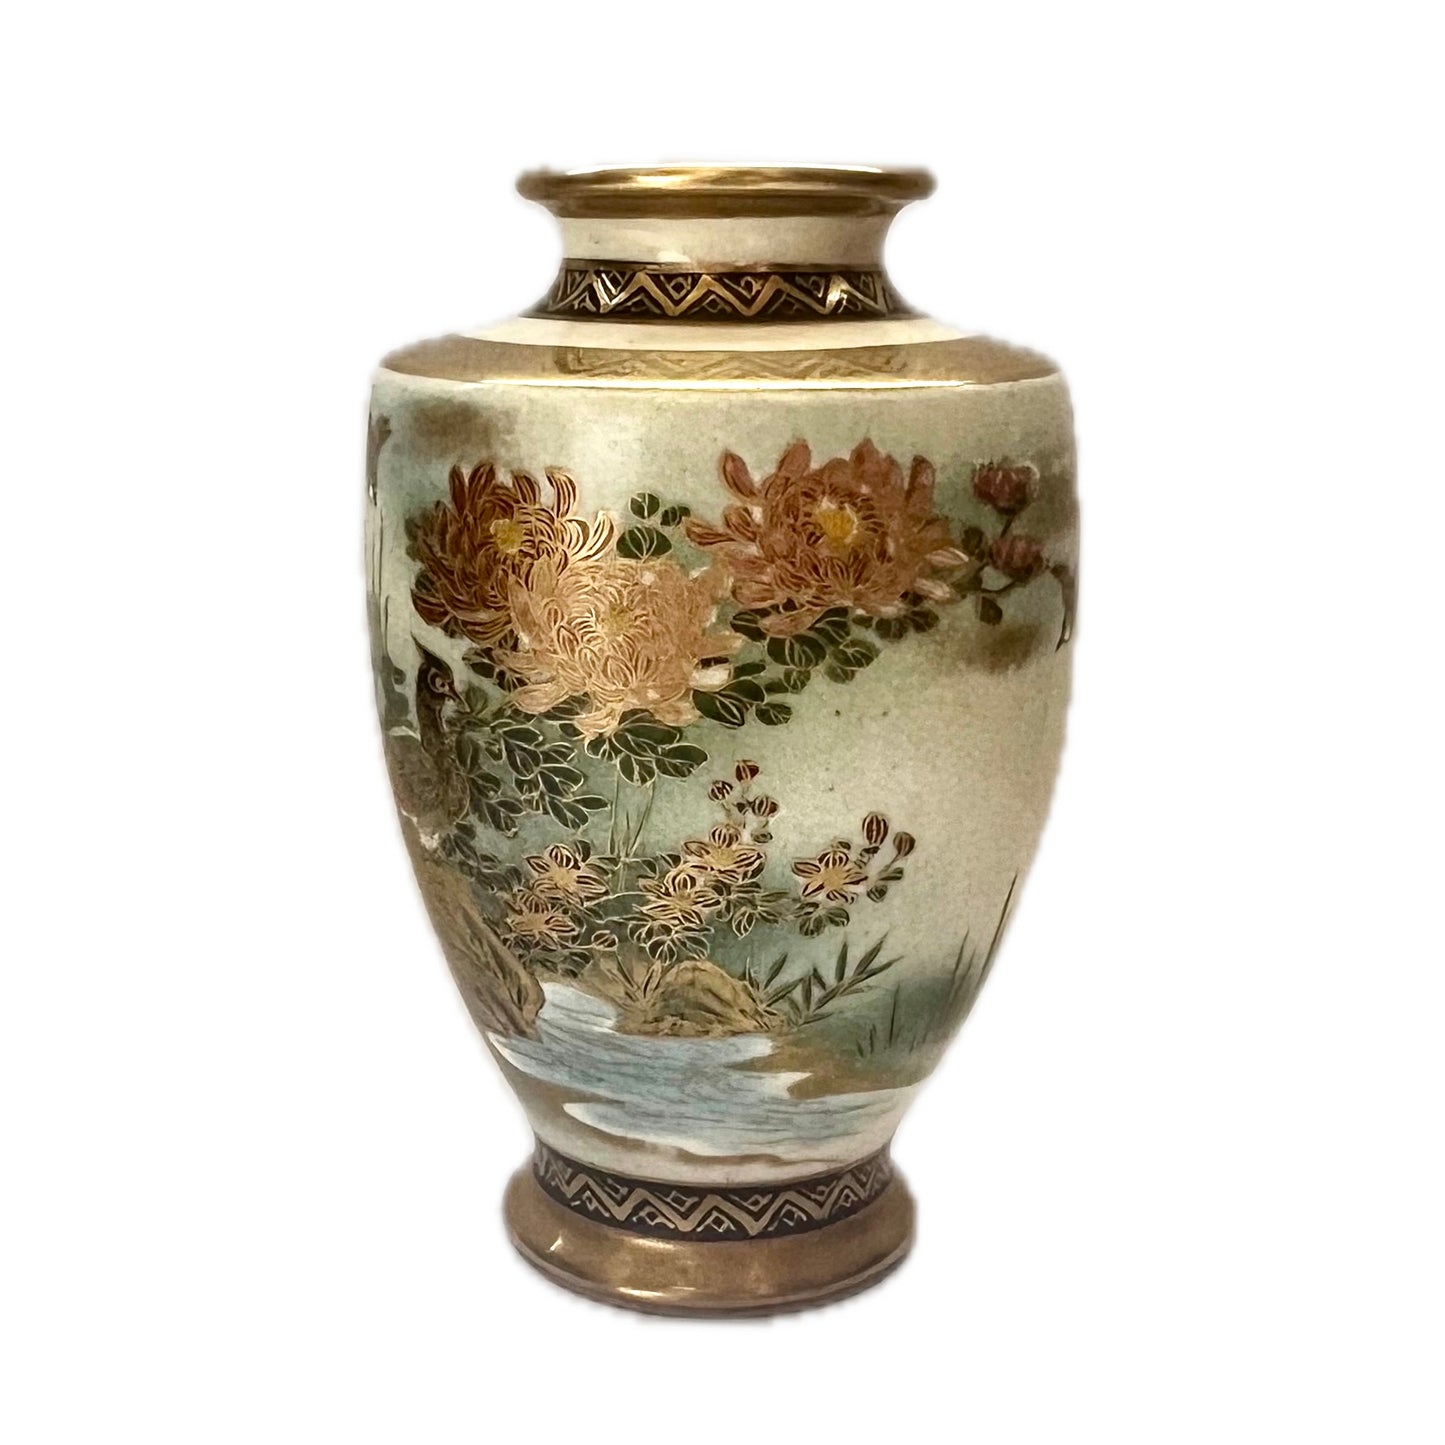 Pair of antique Satsuma porcelain vases circa Meiji period, mid to late 19th century